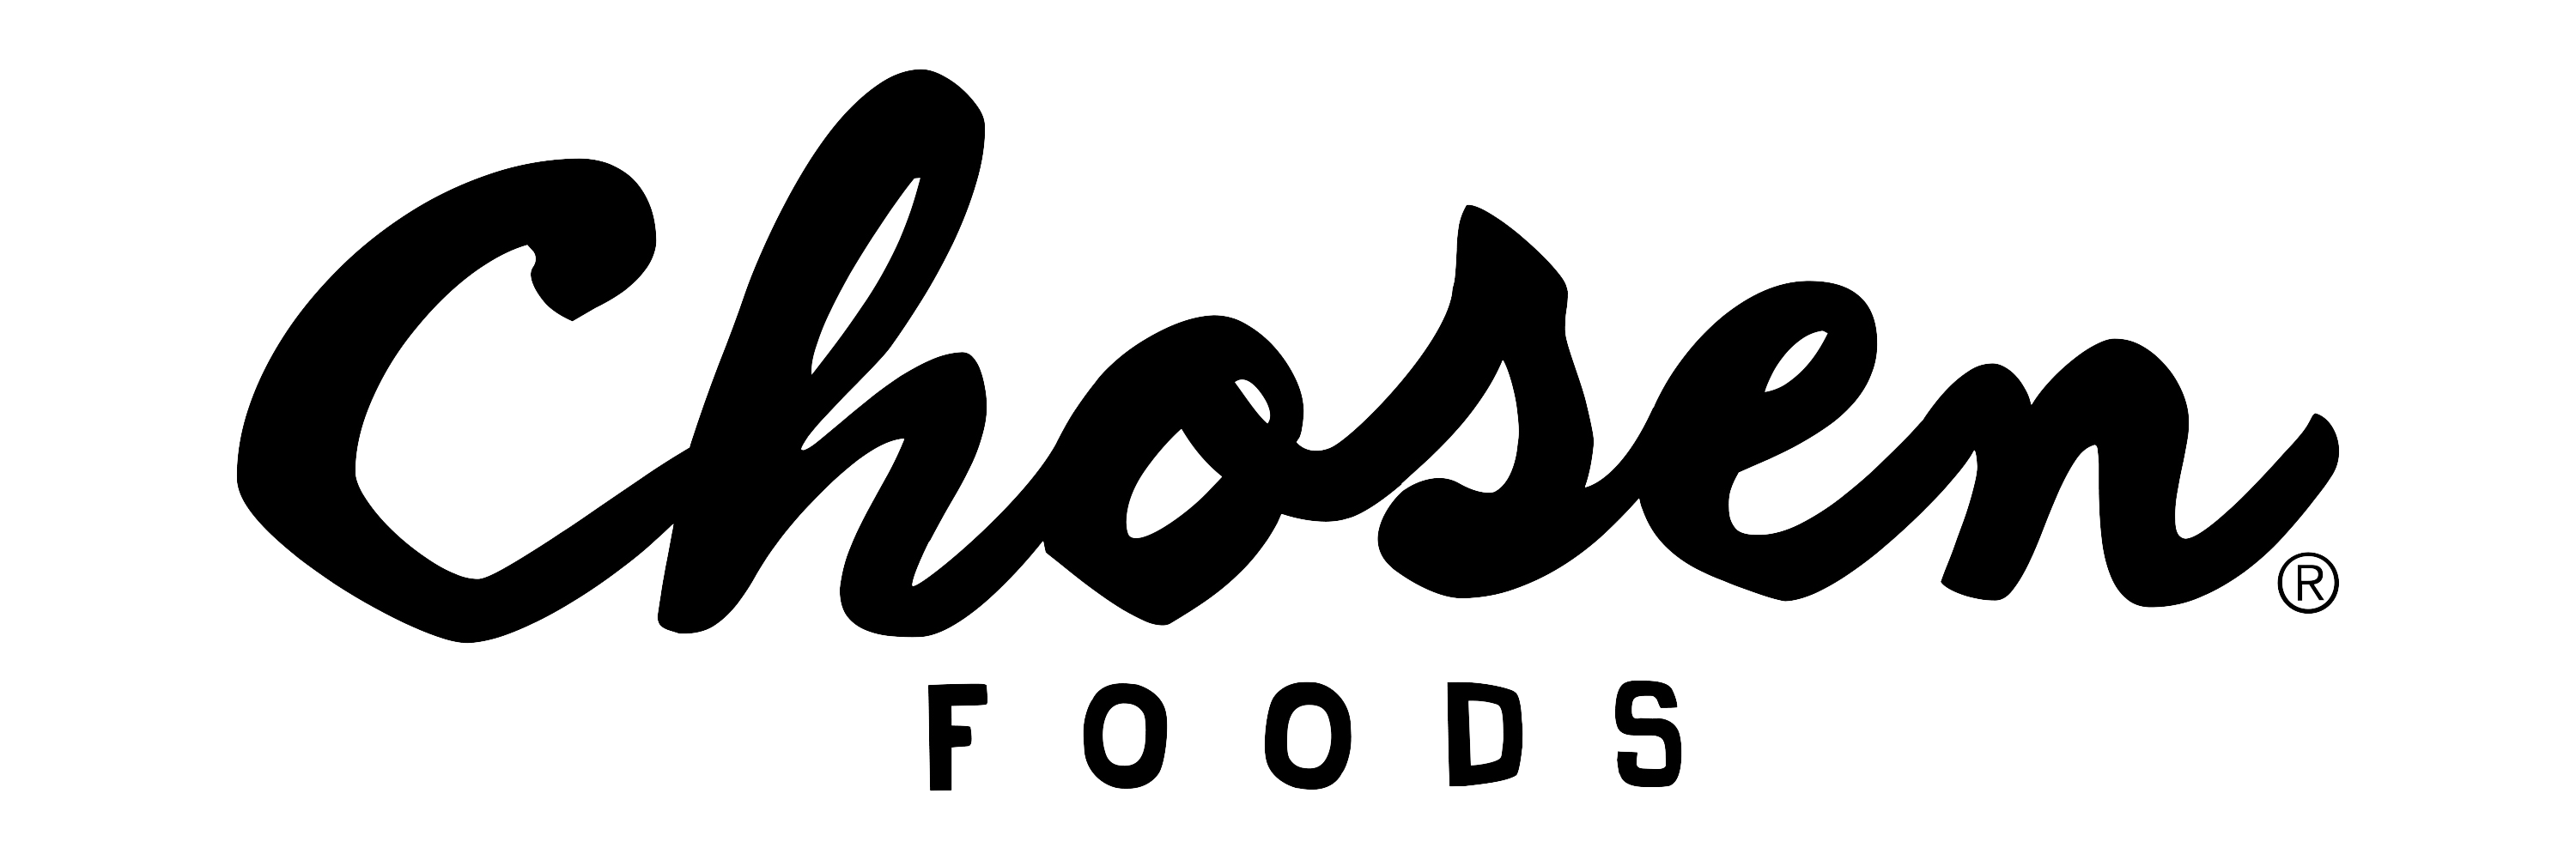 Chosen Foods logo